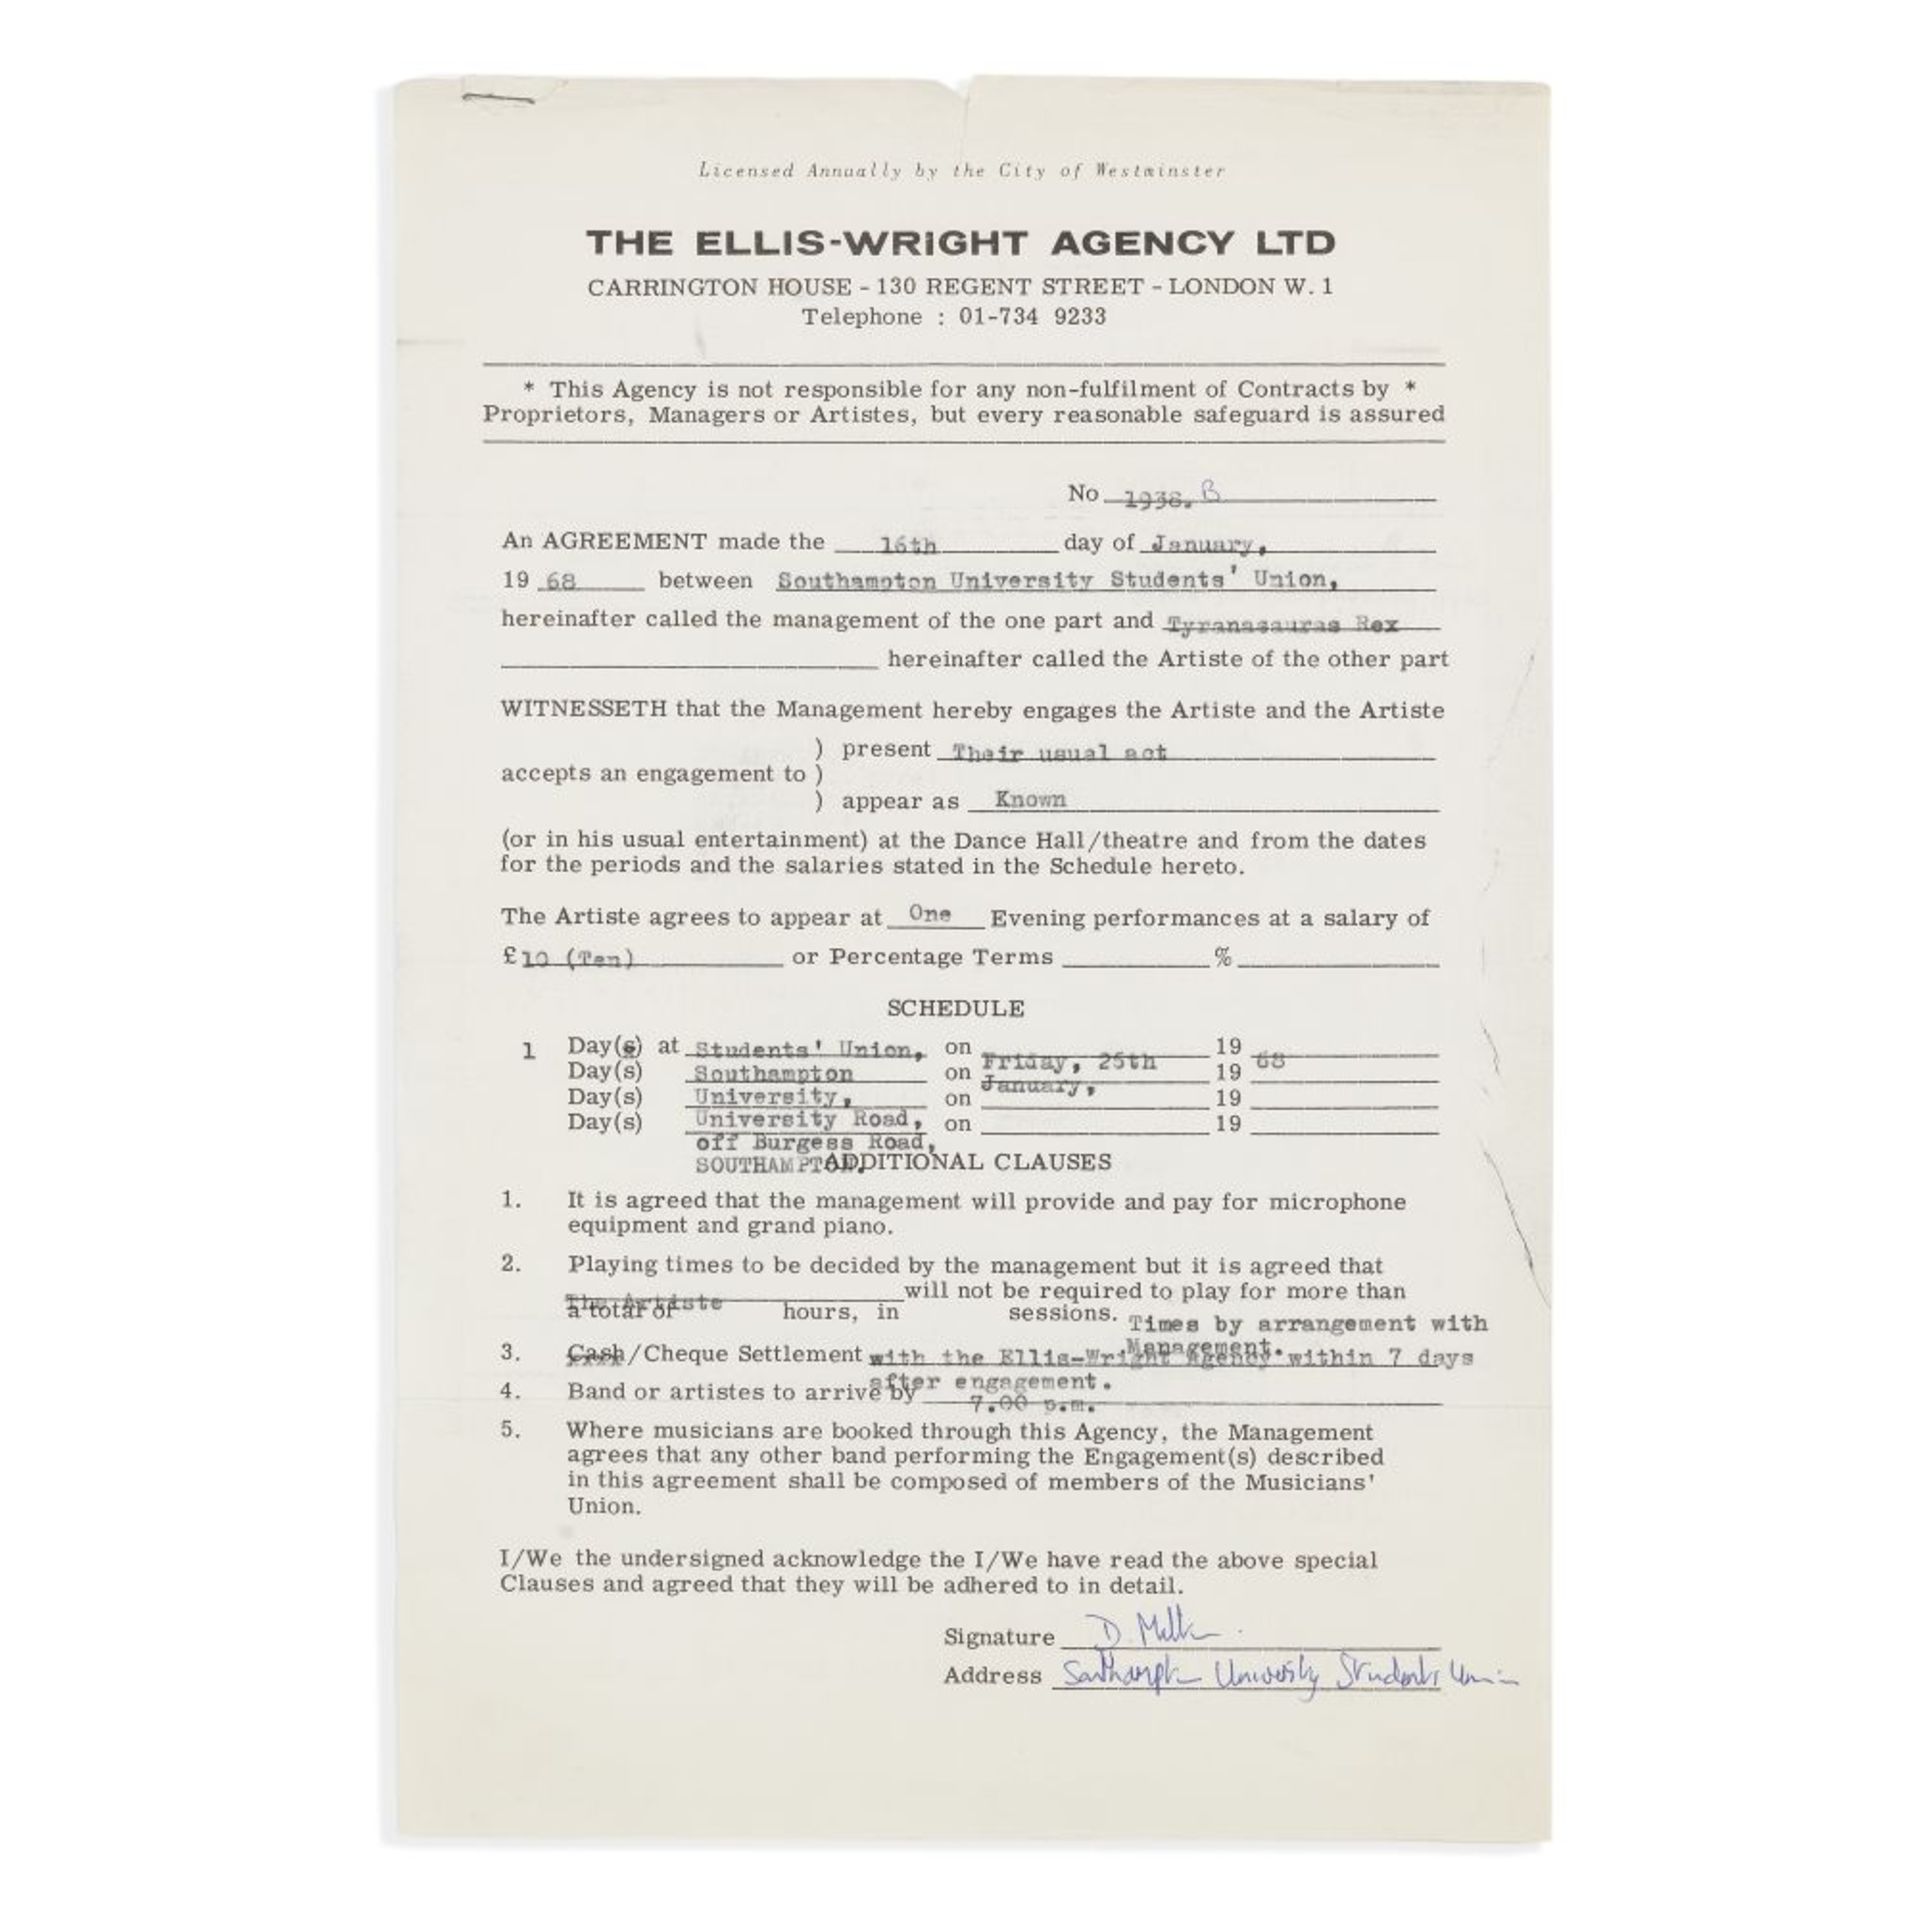 Tyrannosaurus Rex: A Concert Contract For Southampton University, 16th January 1968,